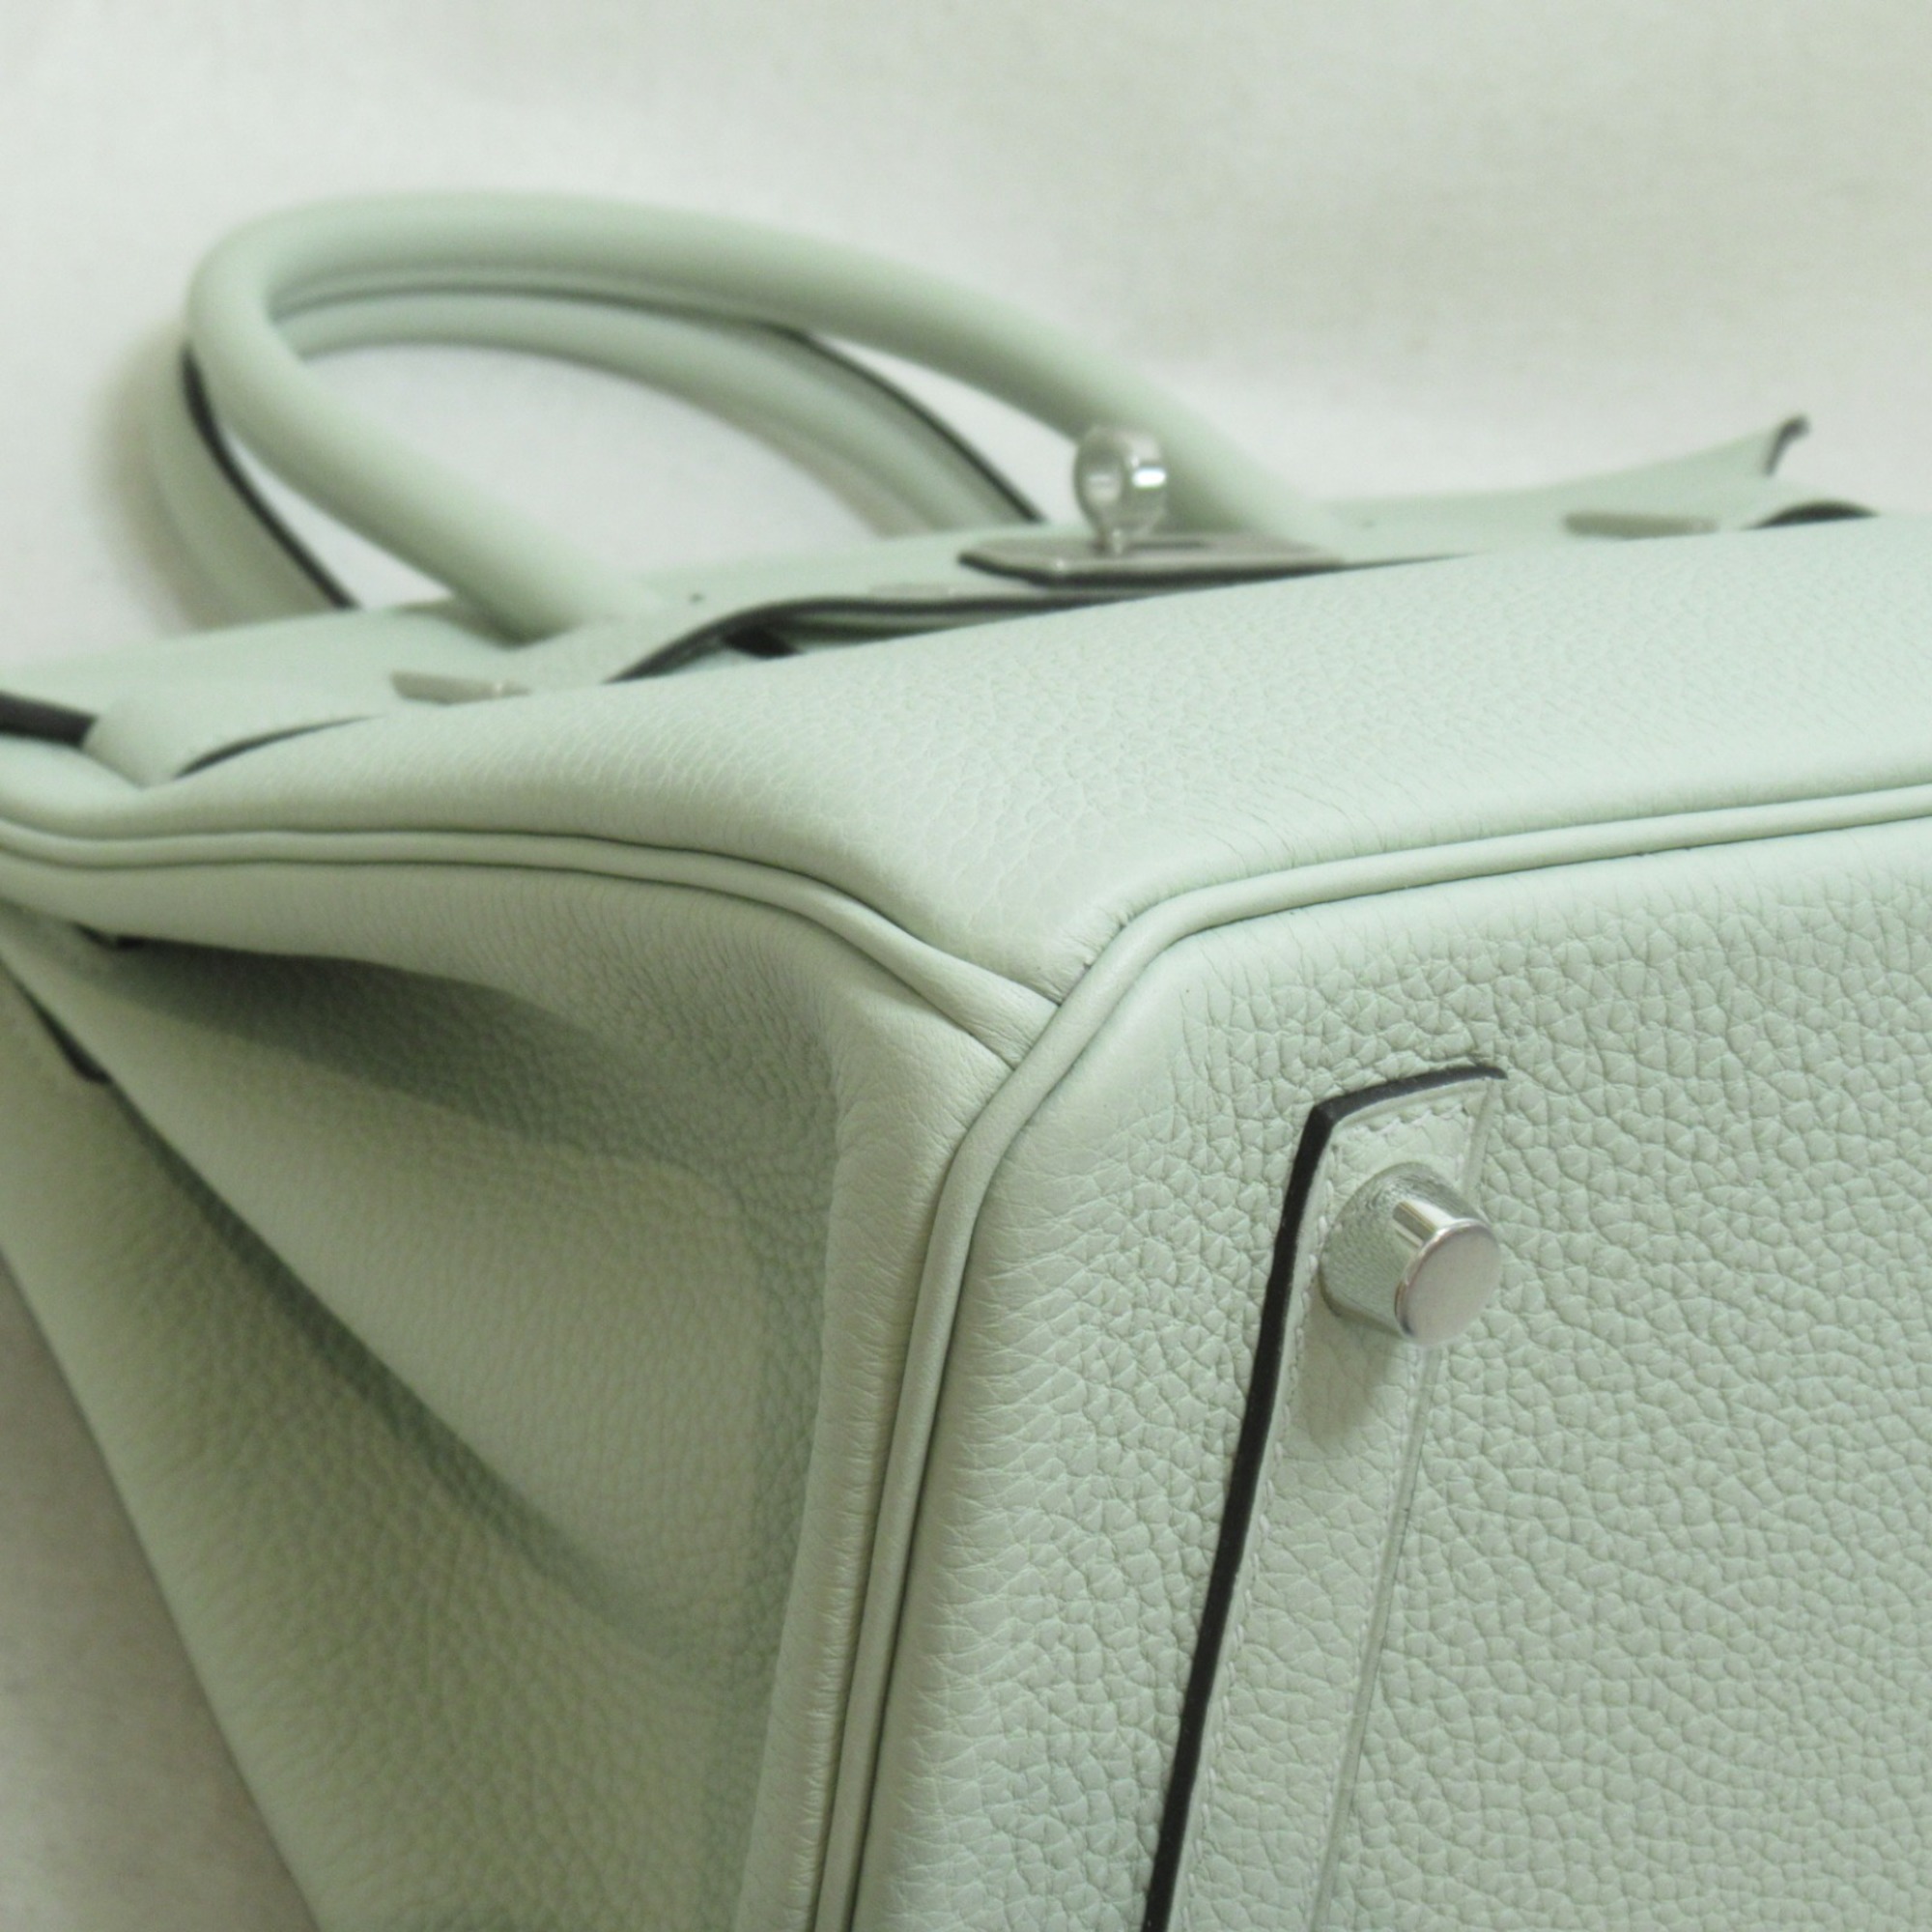 HERMES Birkin 30 handbag Green Togo leather leather